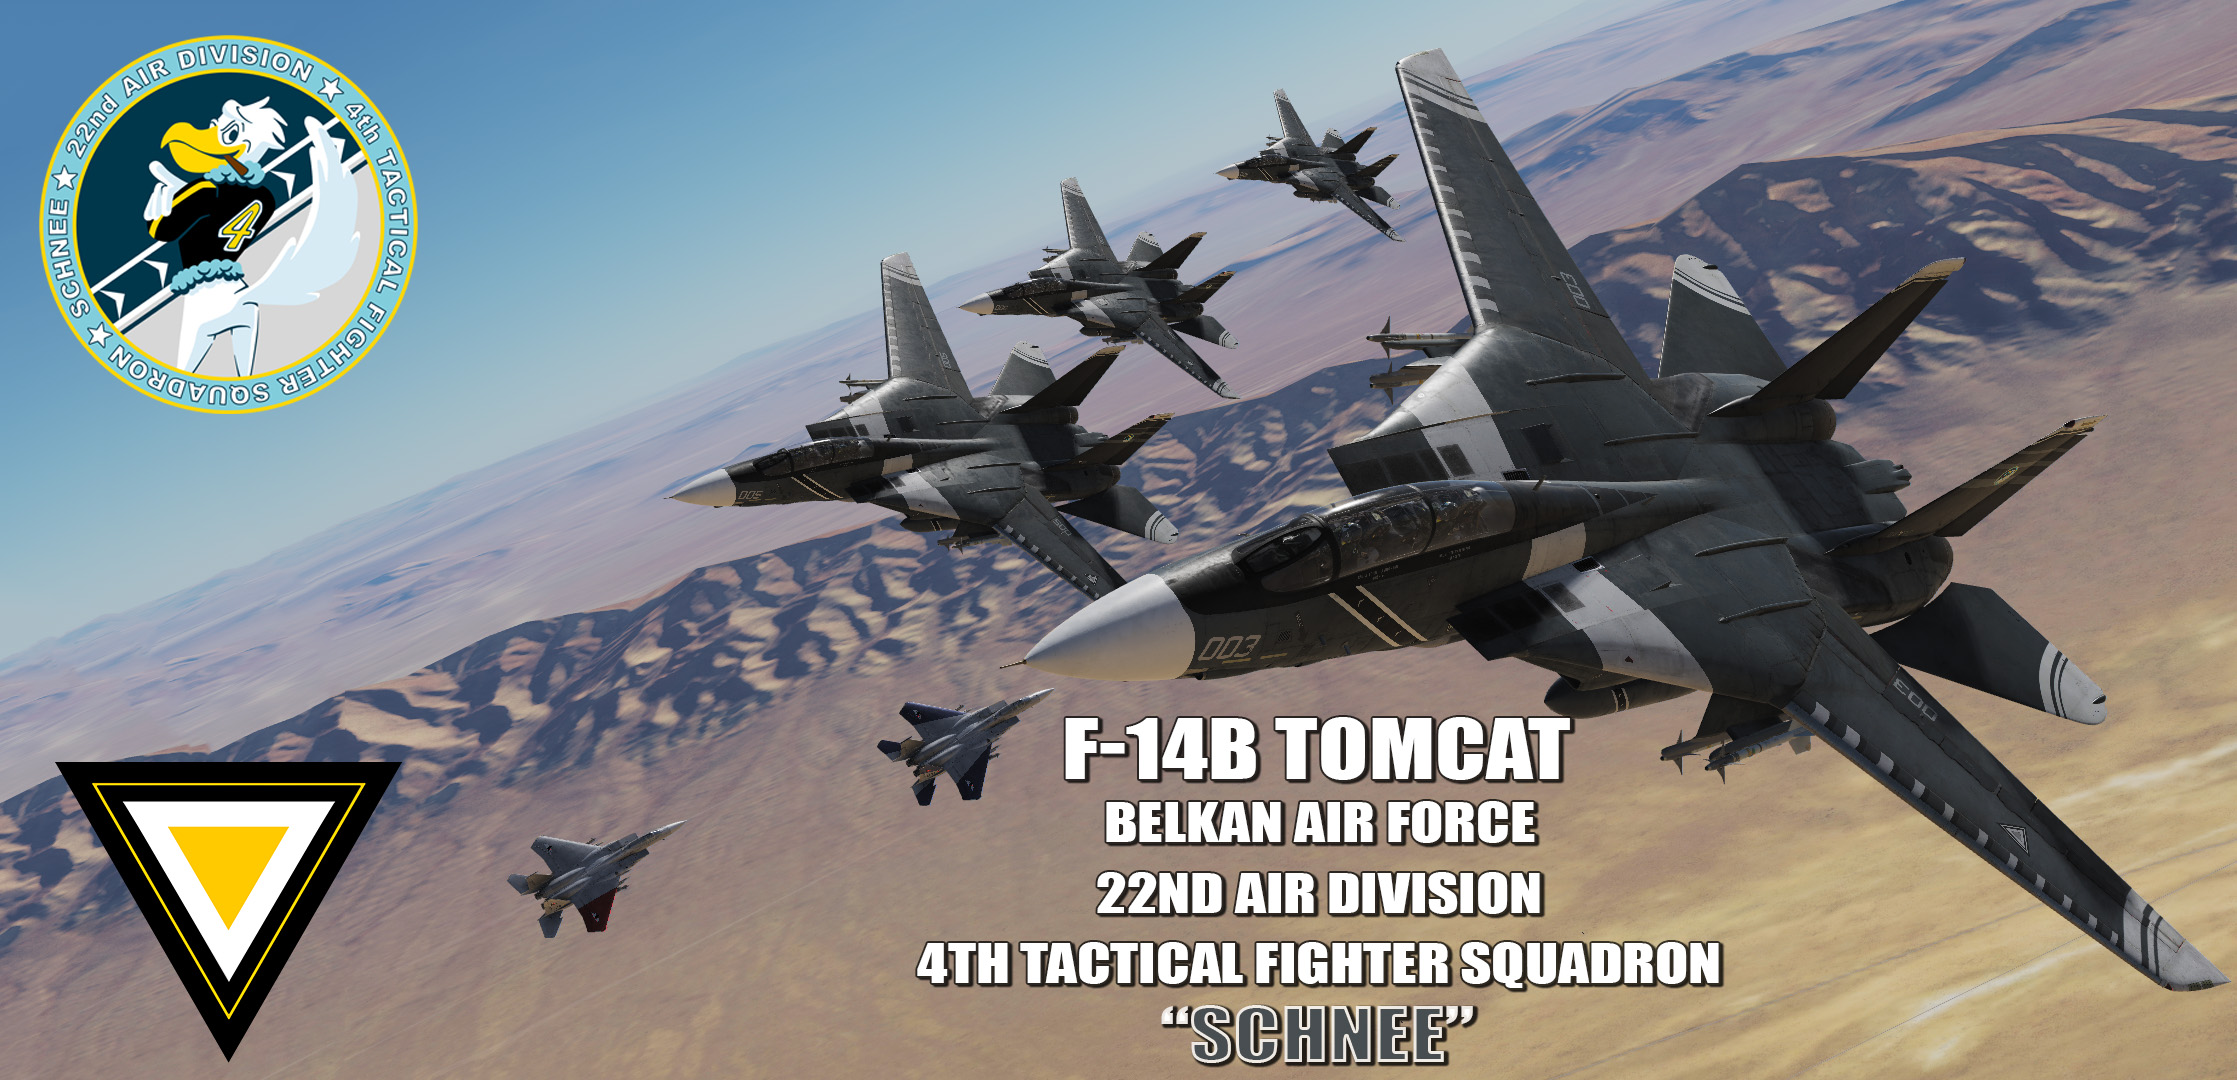 Ace Combat - Belkan Air Force 22nd Air Division, 4th TFS "Schnee" F-14D Super Tomcat